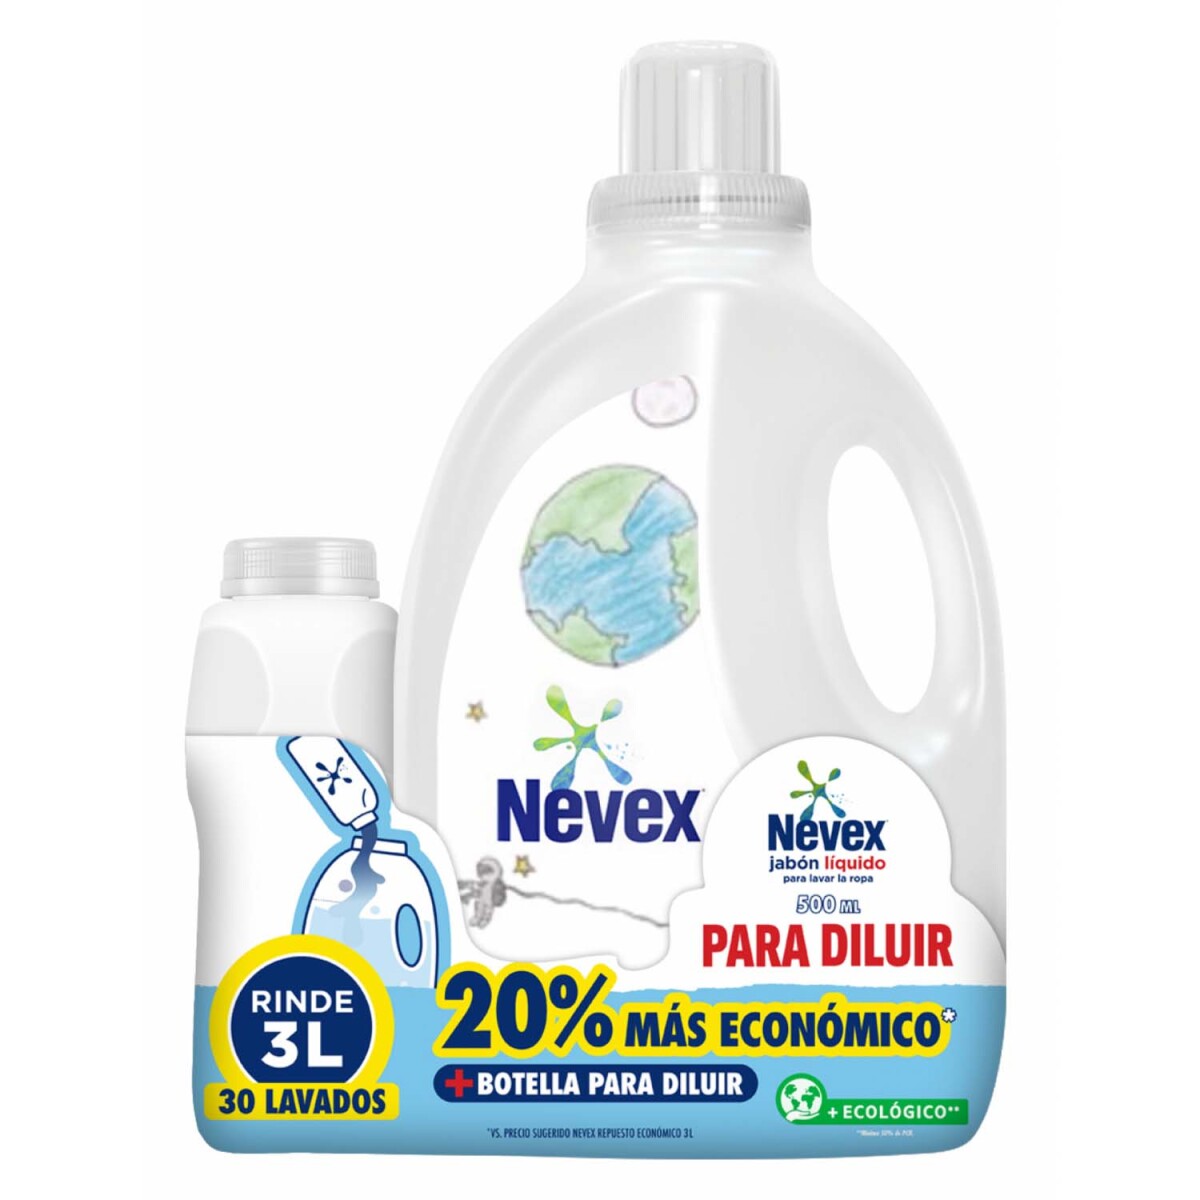 Nevex detergente liquido P Diluir 500ml+Botella 